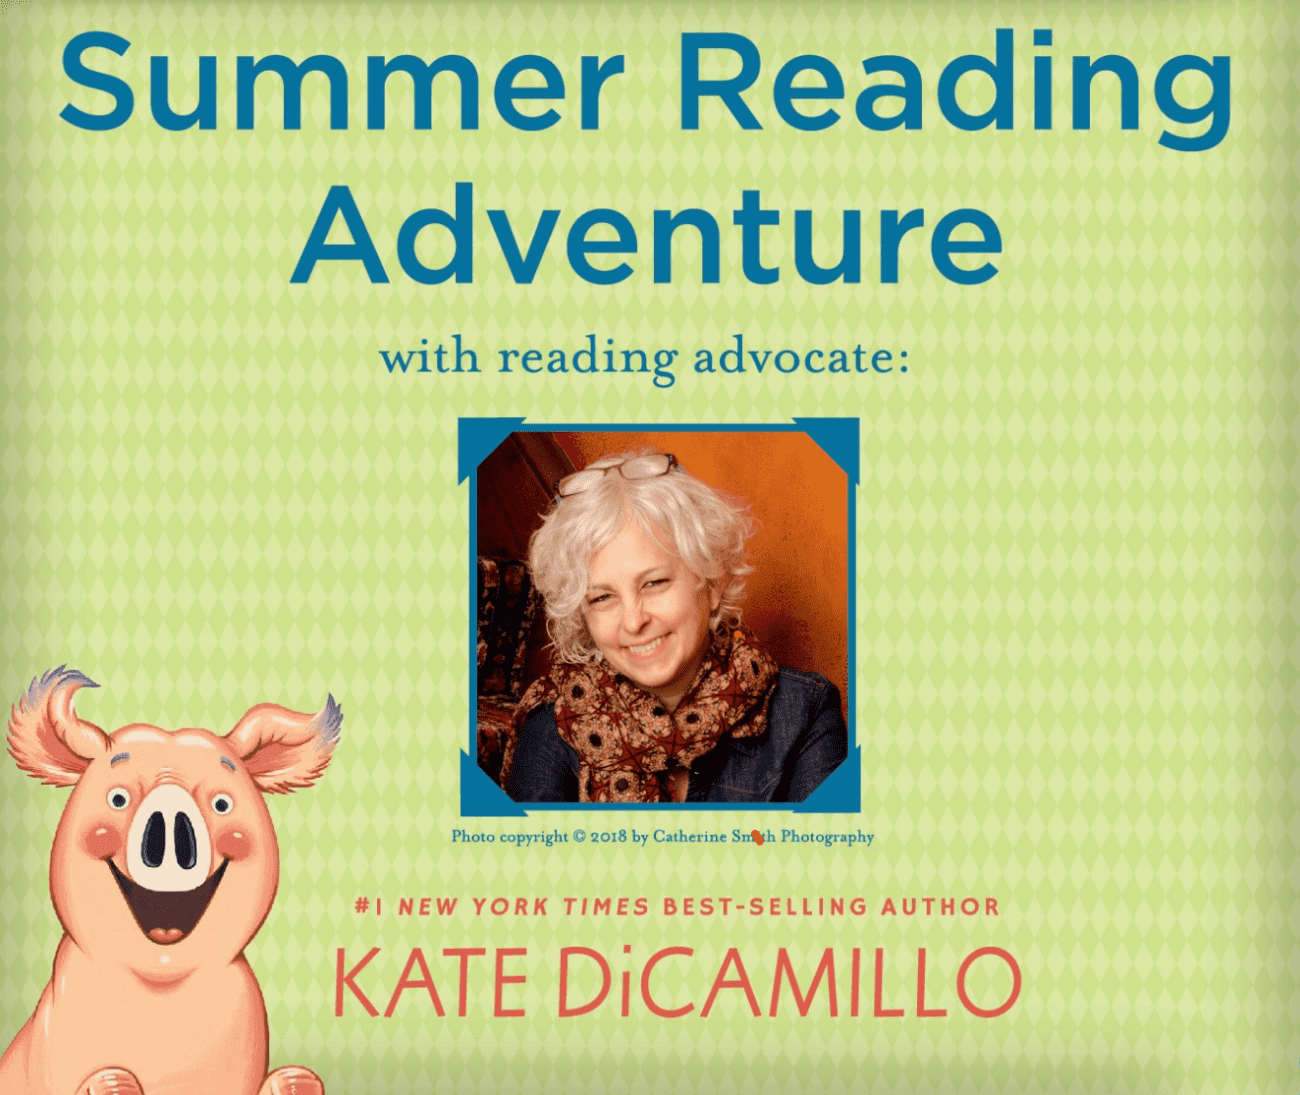 Summer Reading Programs for Kids, as by Teachers